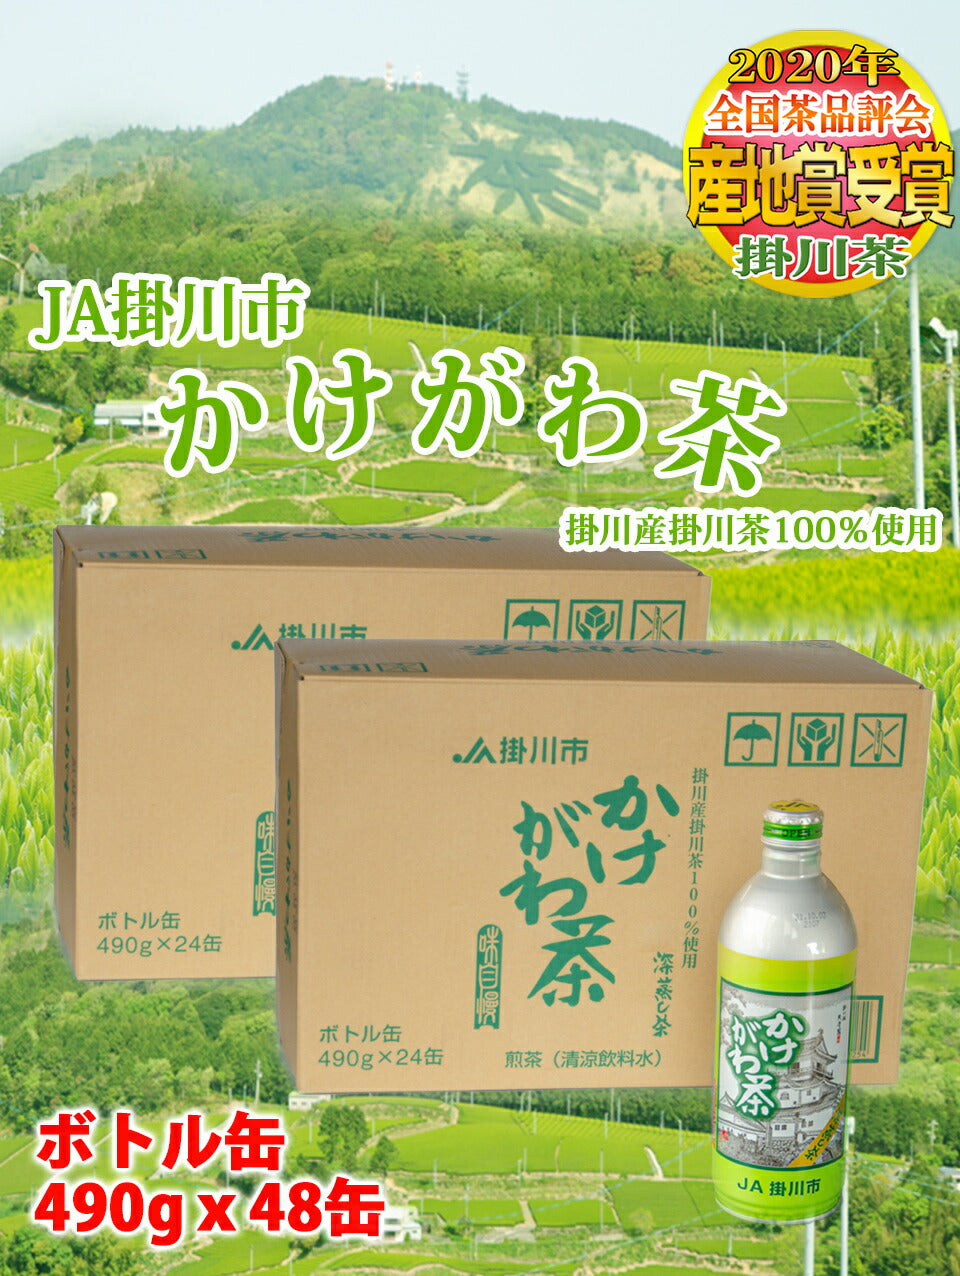 JA Kakegawa City Kakegawa Tea (Deep Steamed Tea) Aluminum Can 490g x 24 pieces